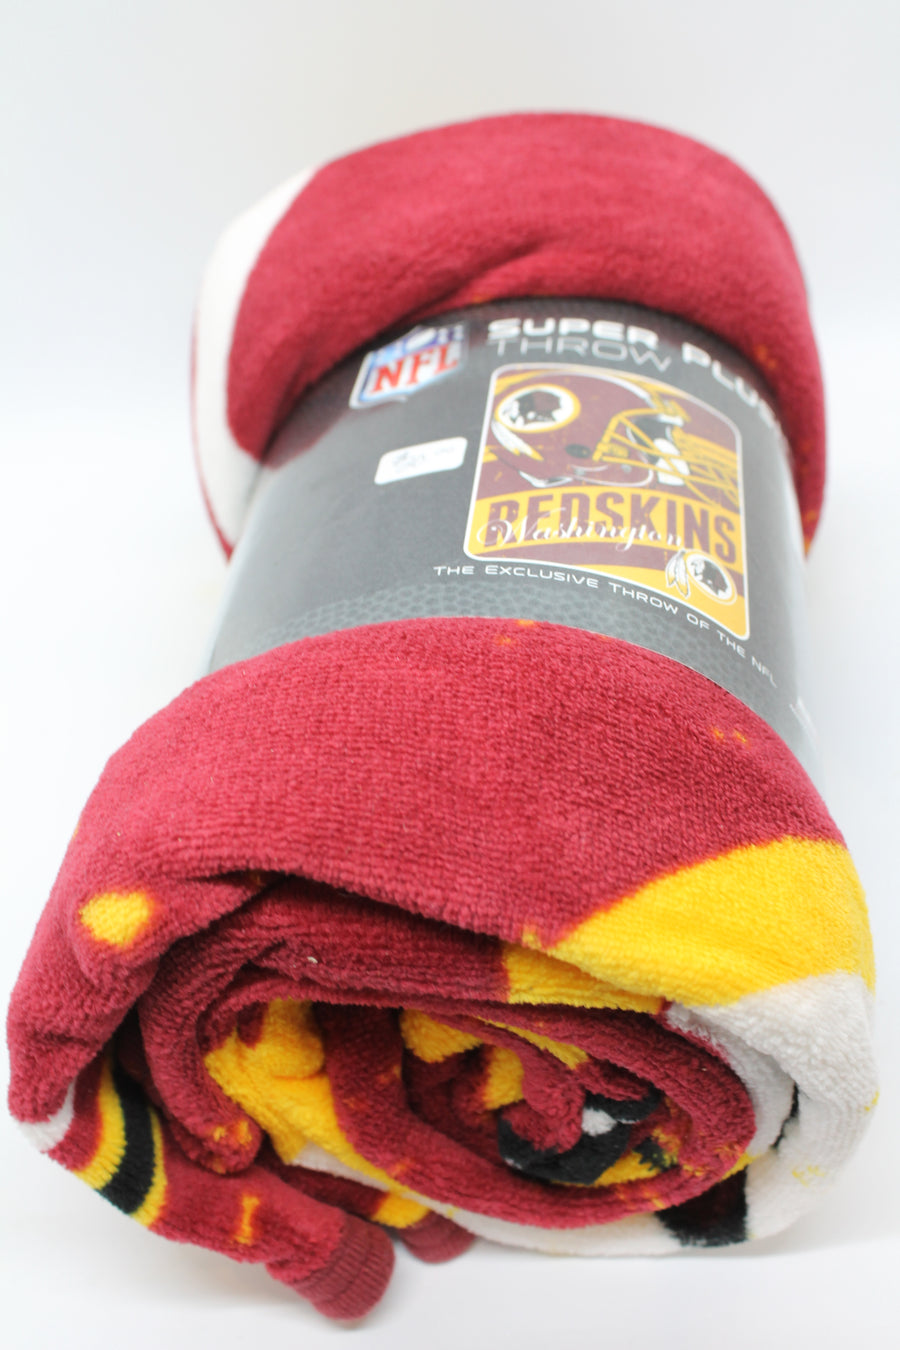 Washington Redskins Super Plush Throw (Blanket)